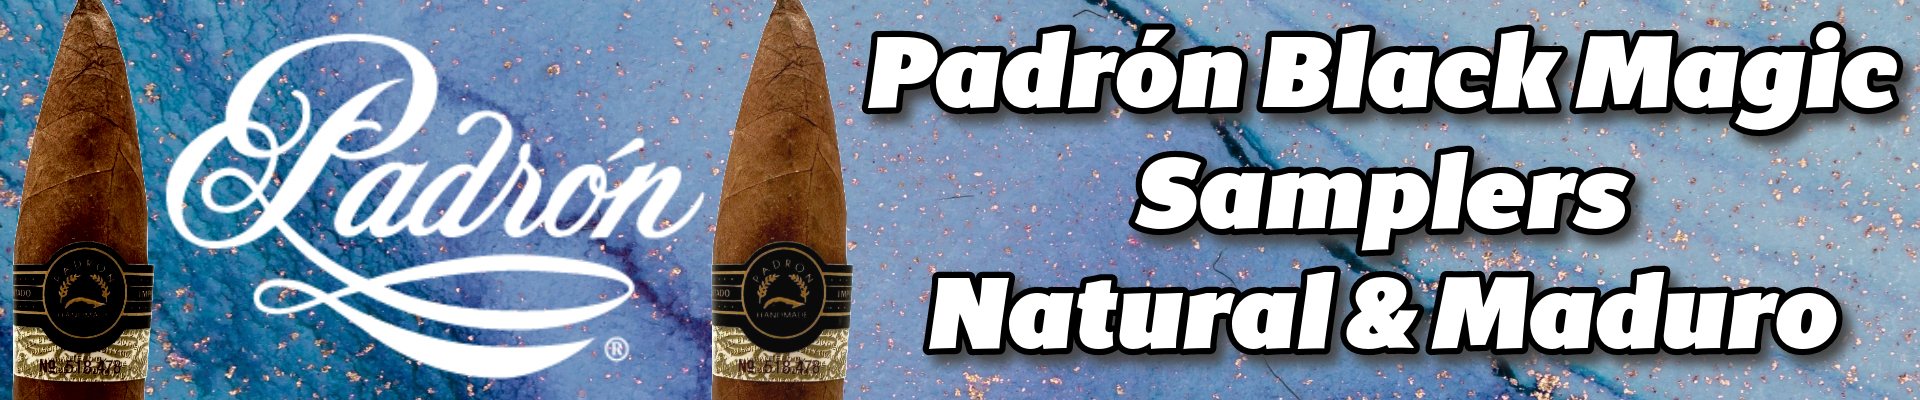 Padron Black Cigars